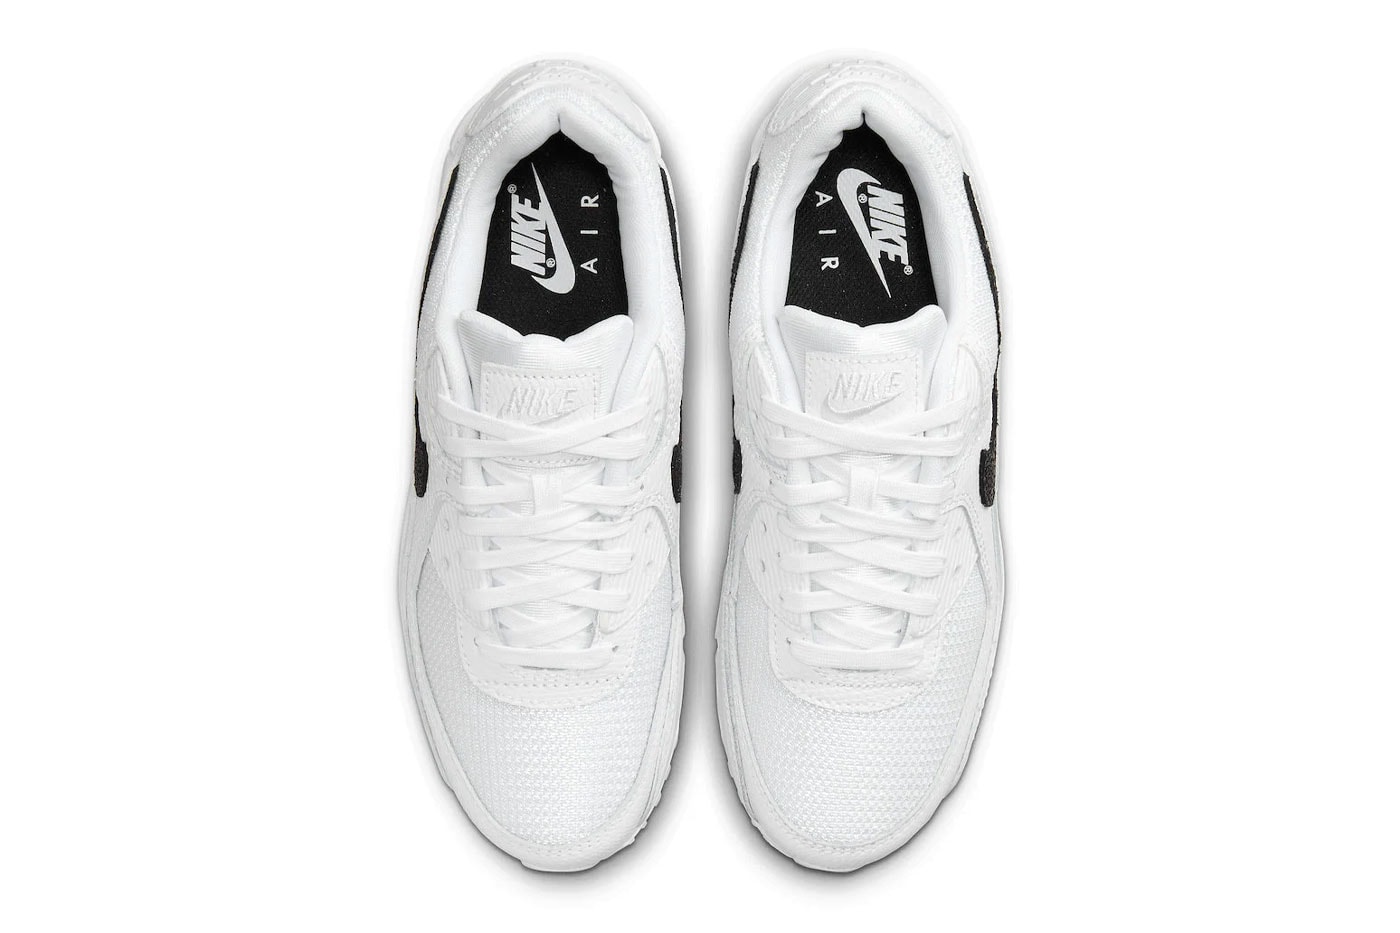 Nike Air Max 90 white reptile snakeskin black two tone release info date price